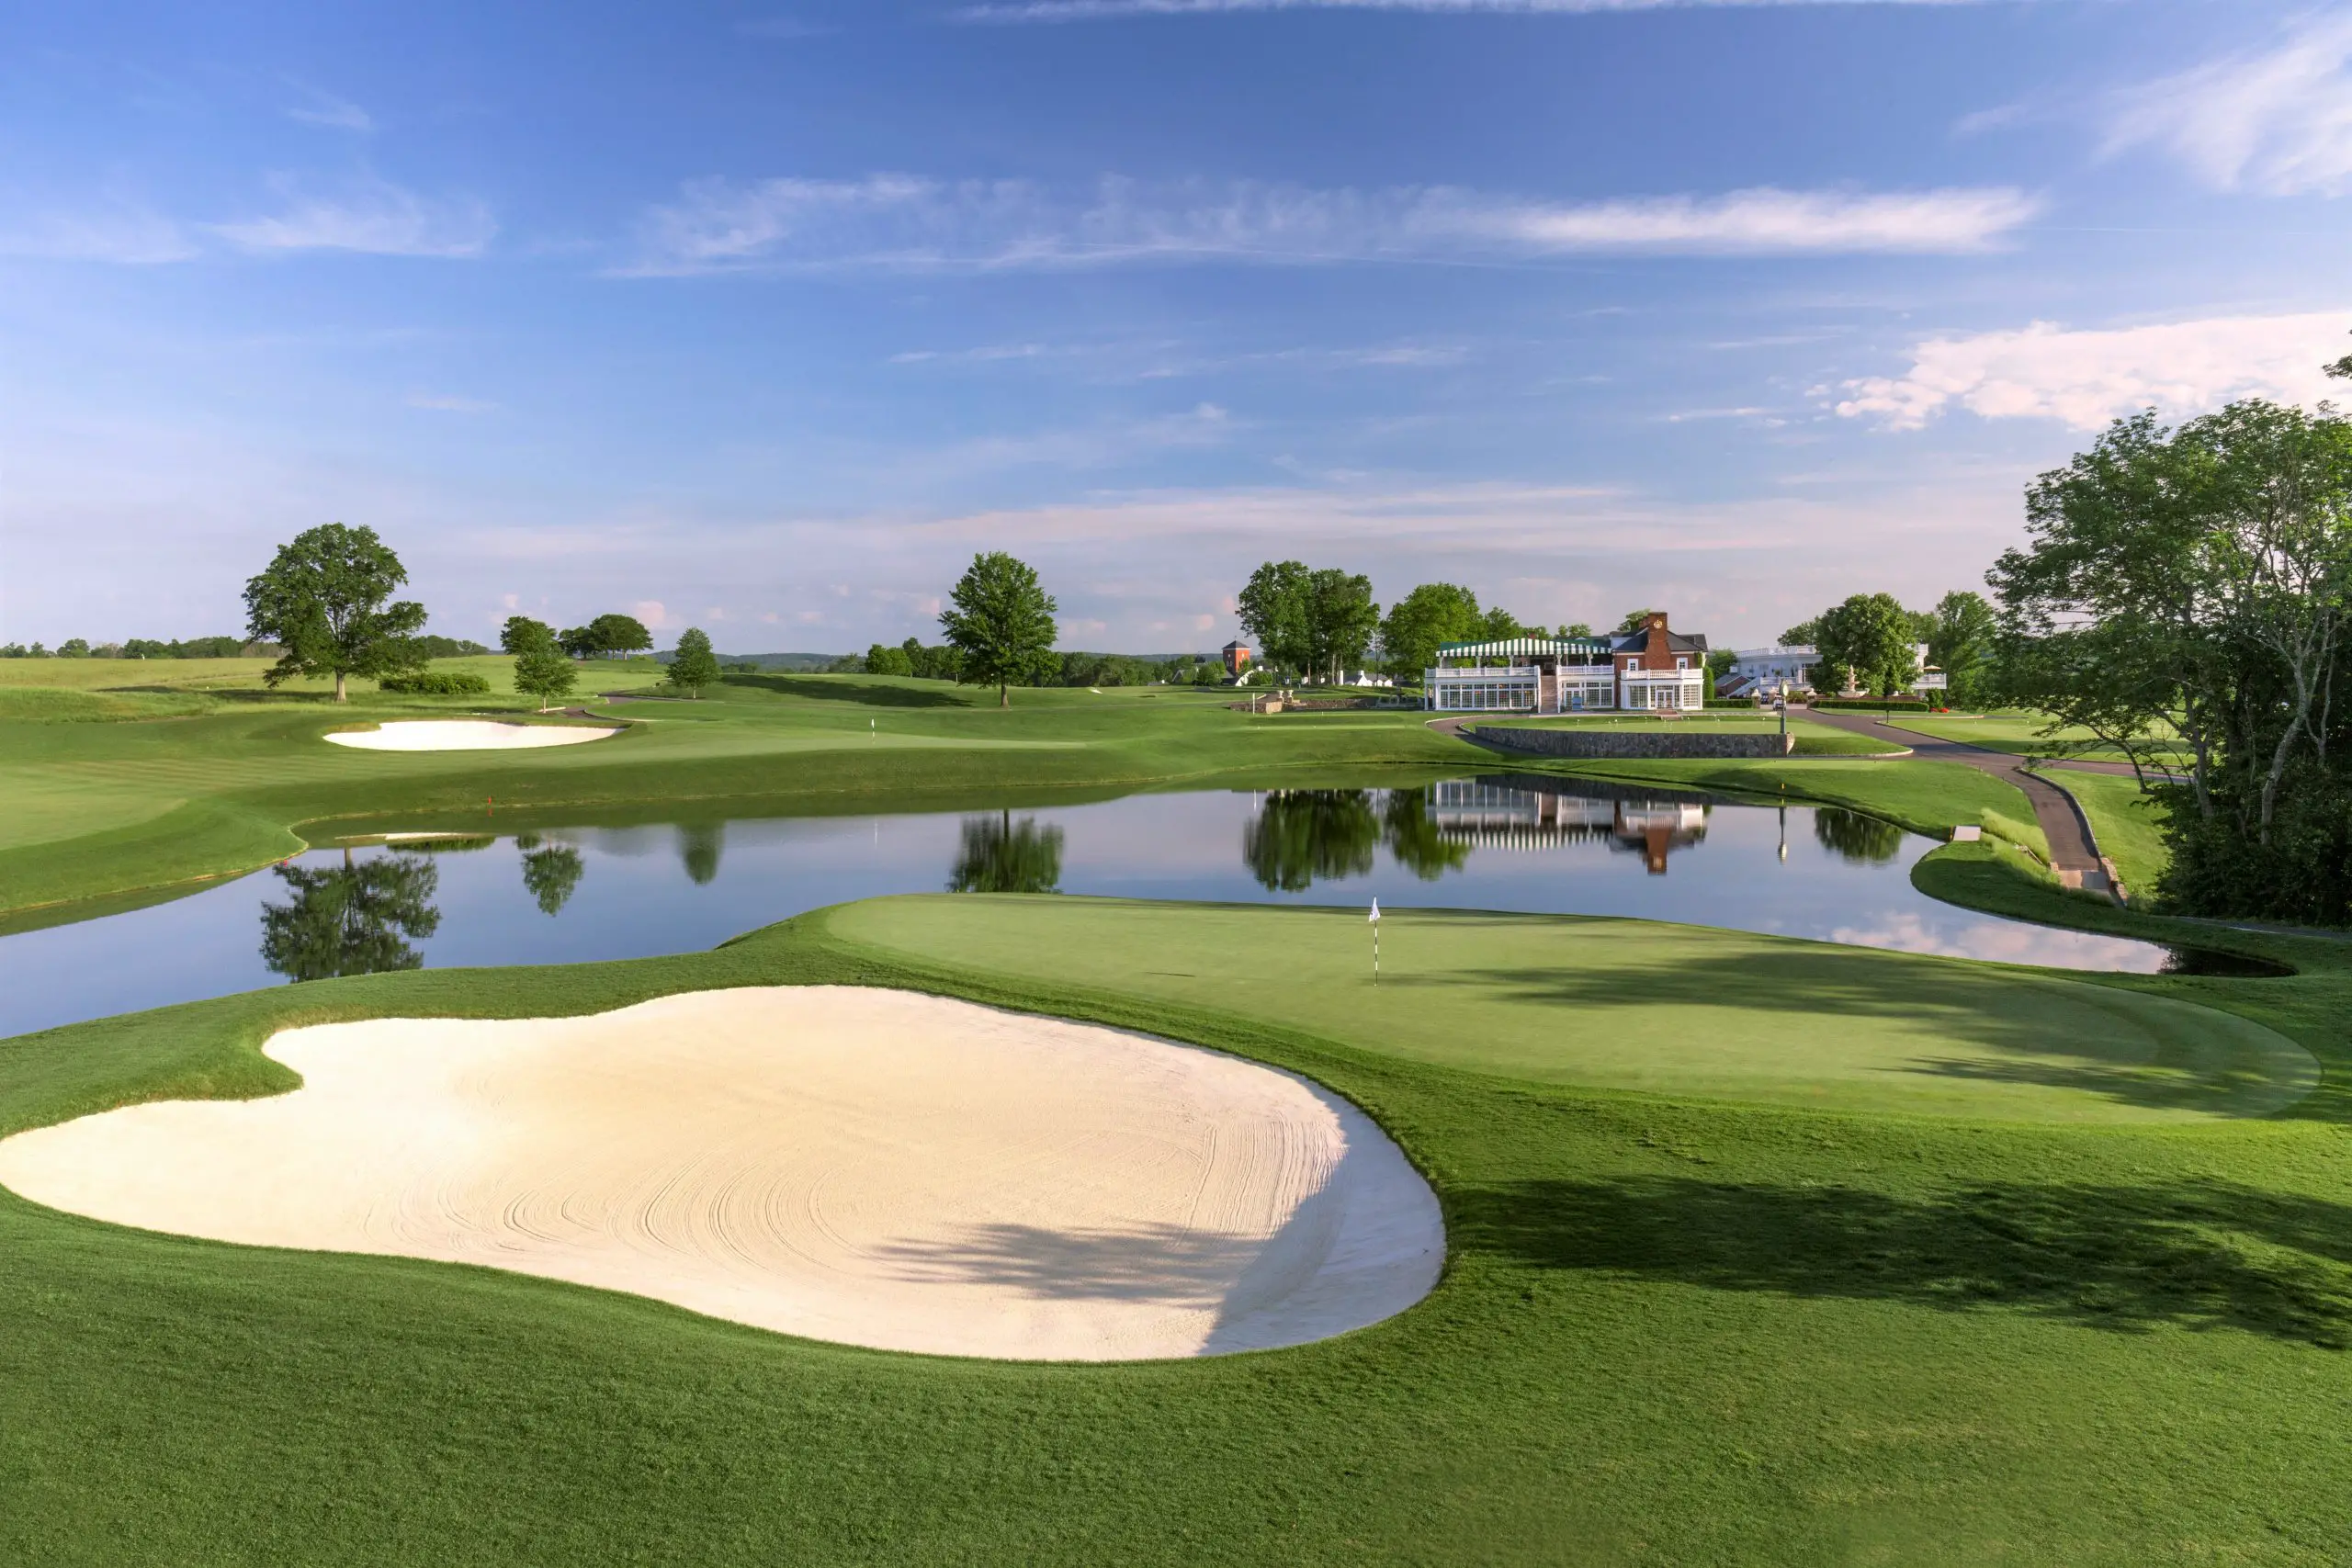 Trump Golfs Ultimate Course: Hole No. 2